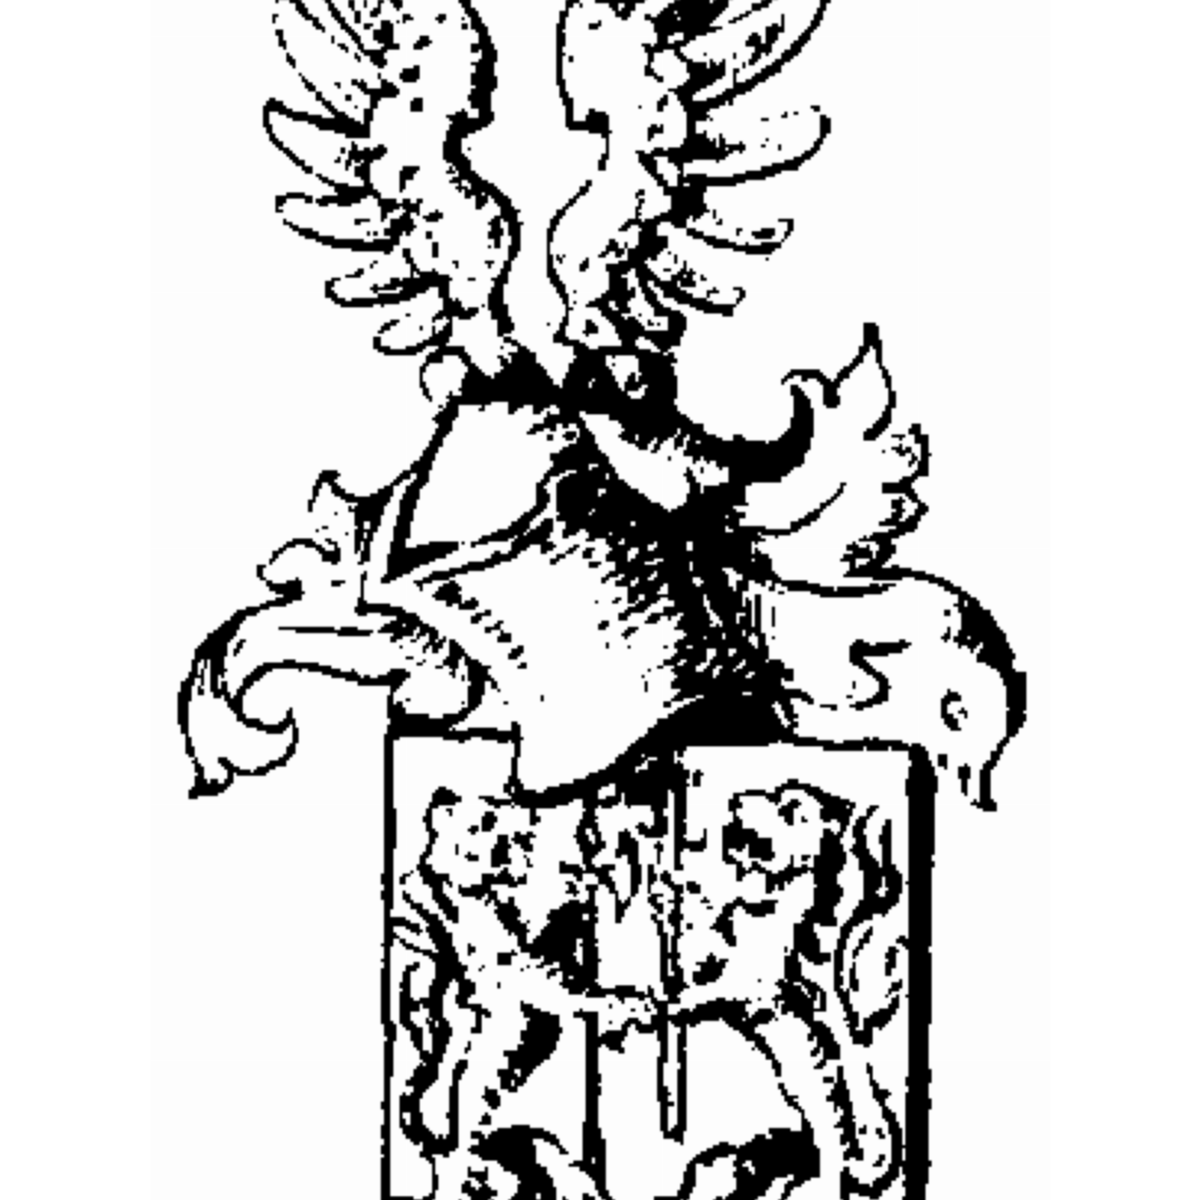 Wappen der Familie Martin